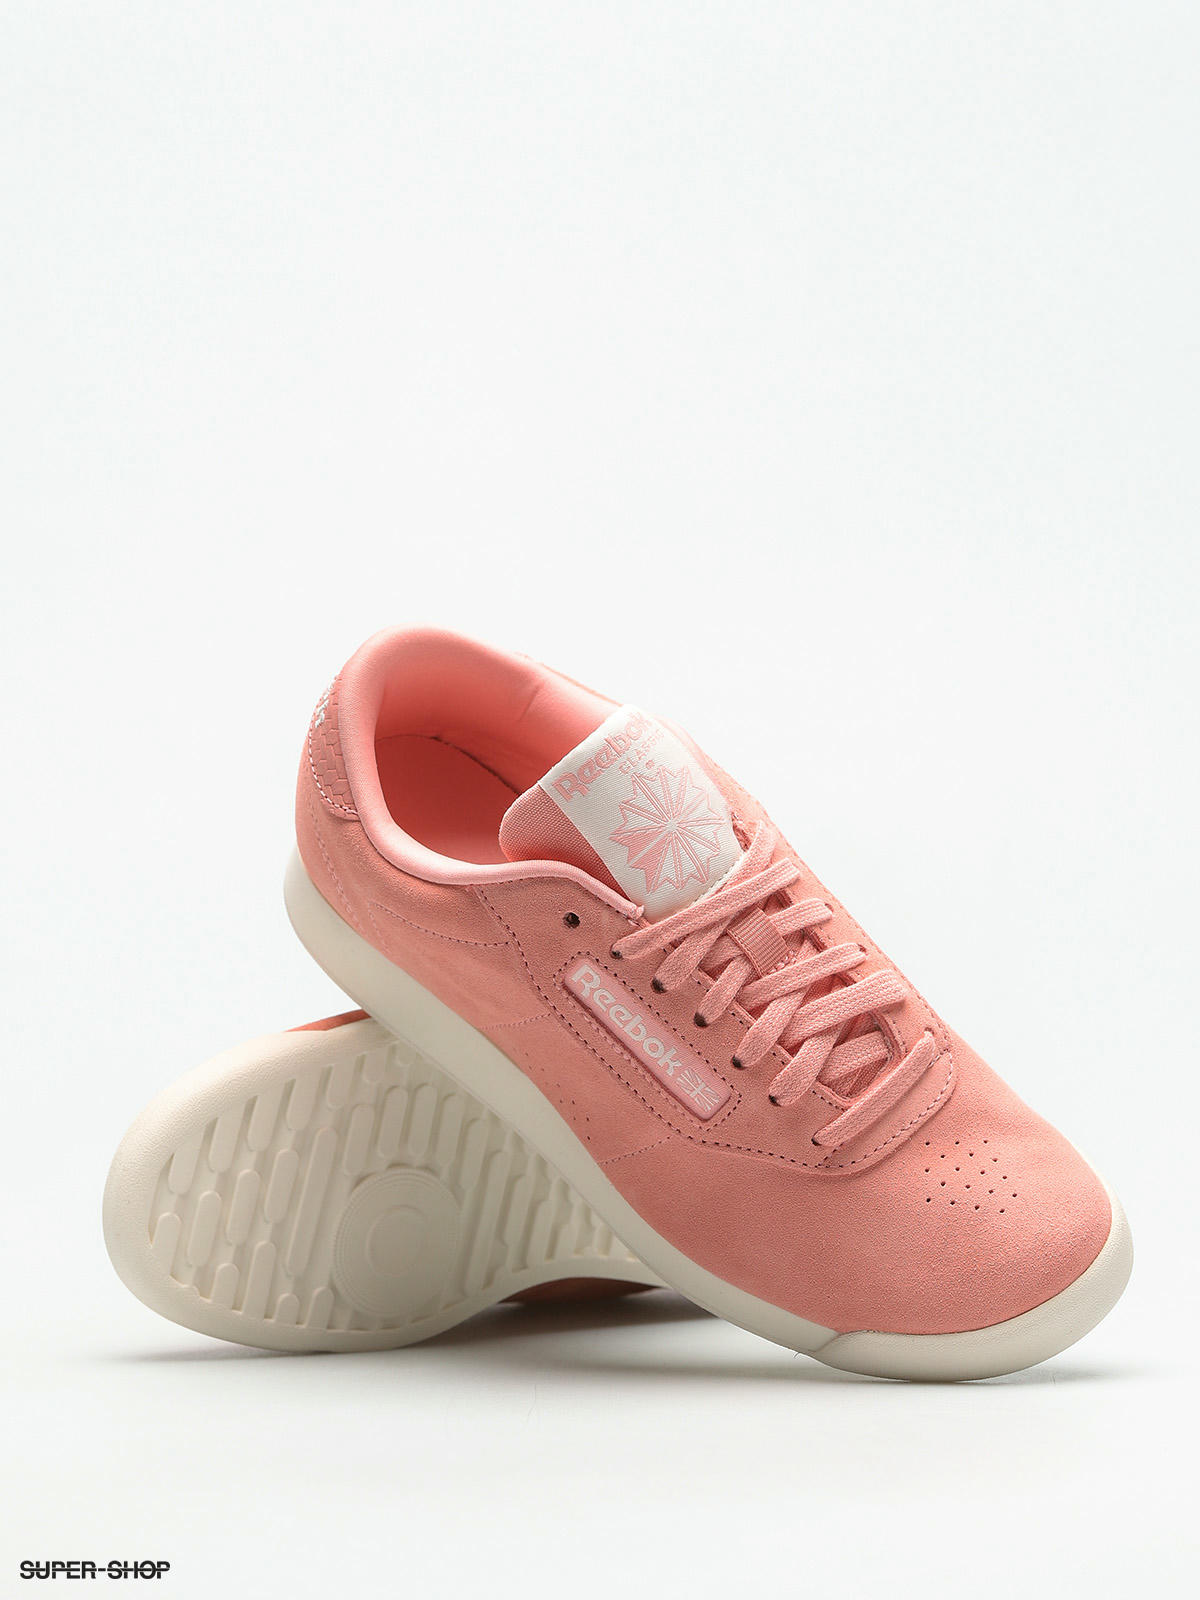 Reebok Shoes Woven Emb Wmn (sweet pink/chalk)